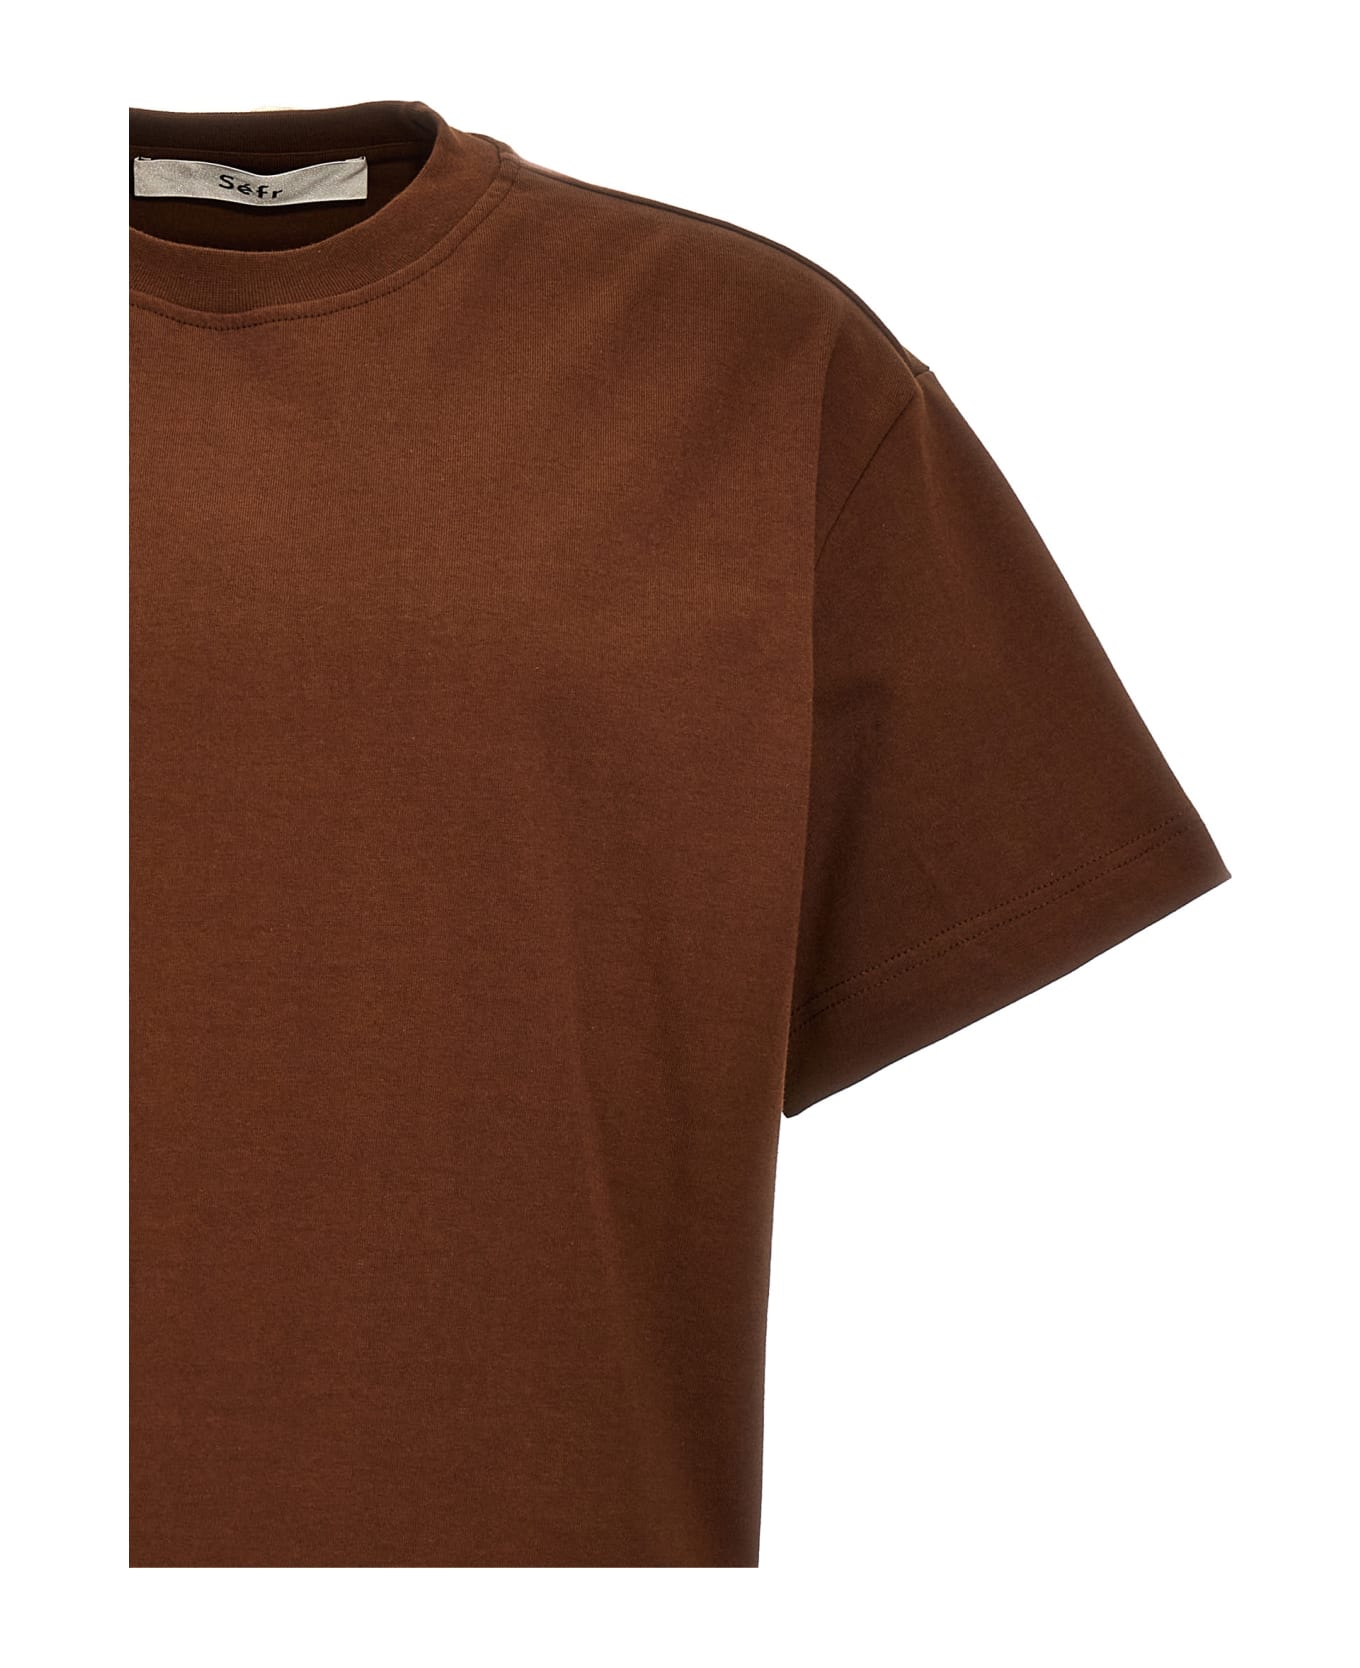 Séfr 'atelier' T-shirt - Brown